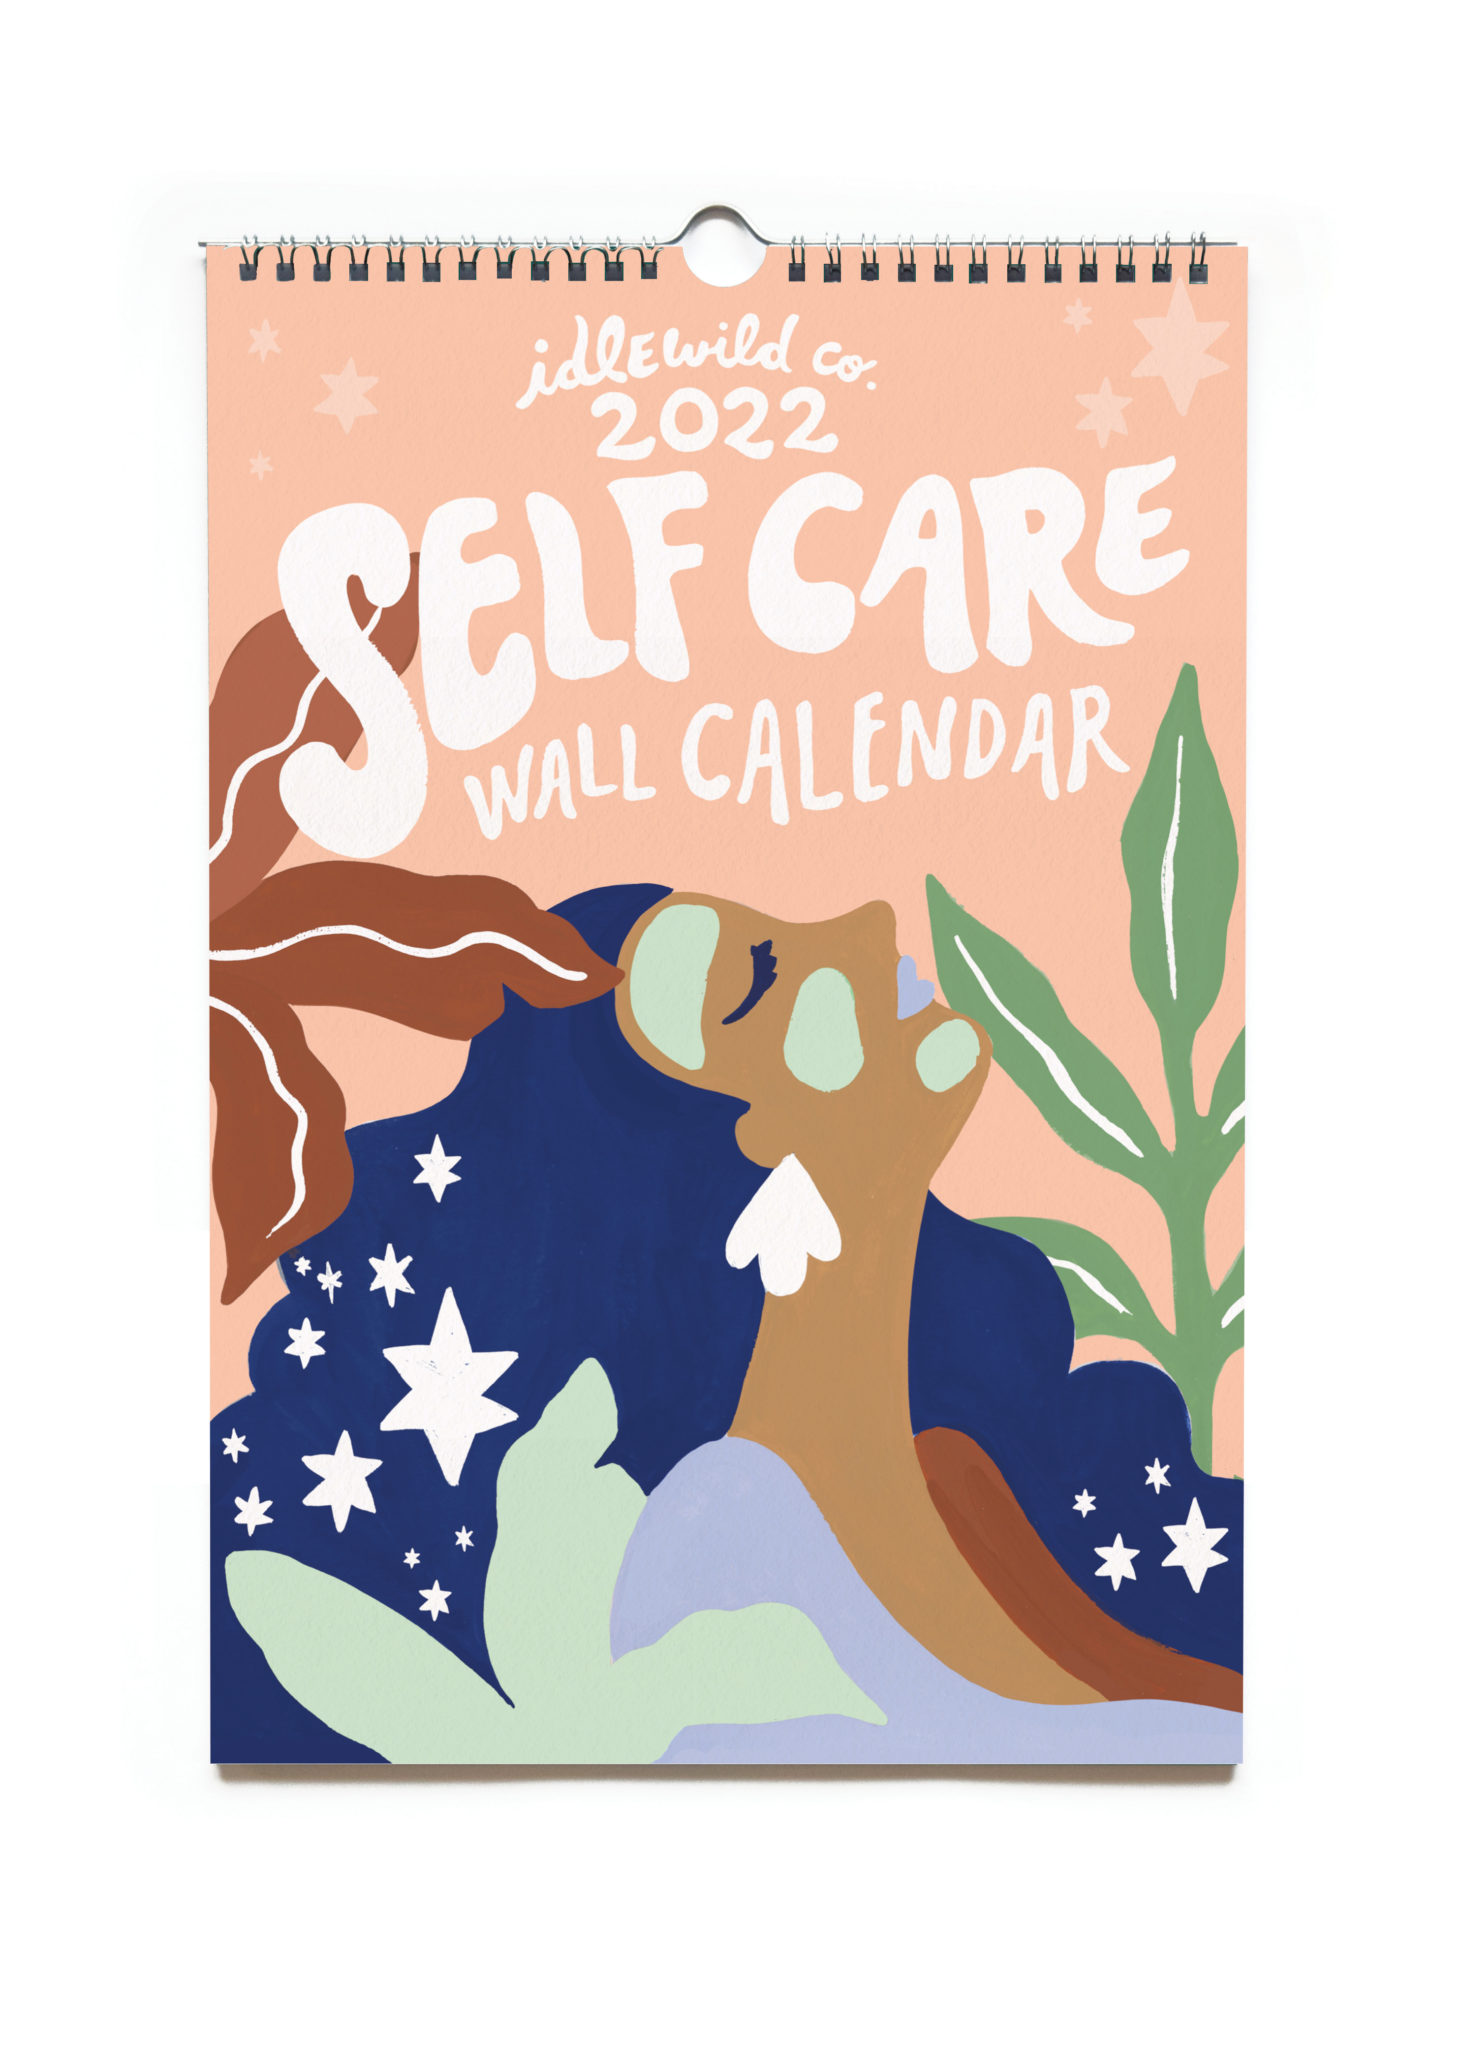 Self Care 2022 Wall Calendar – Idlewild Co.